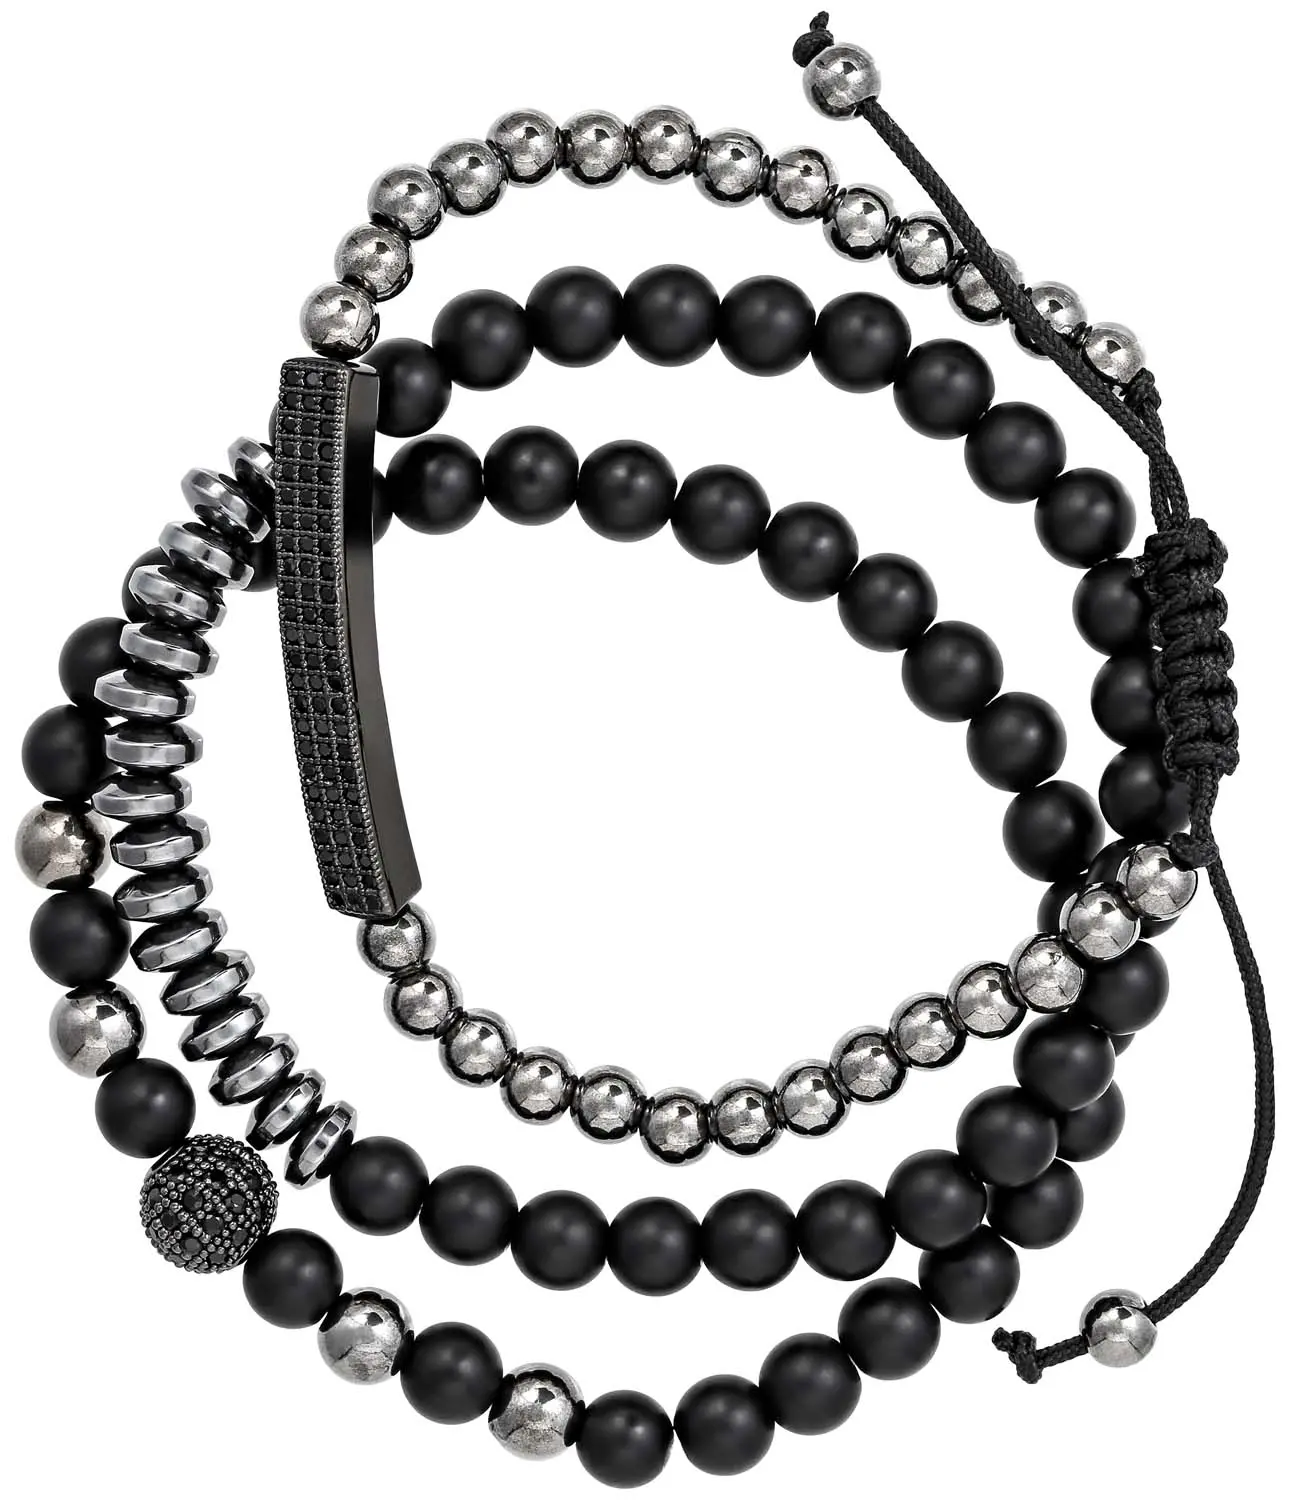 Herenarmbanden set - Black Pearls